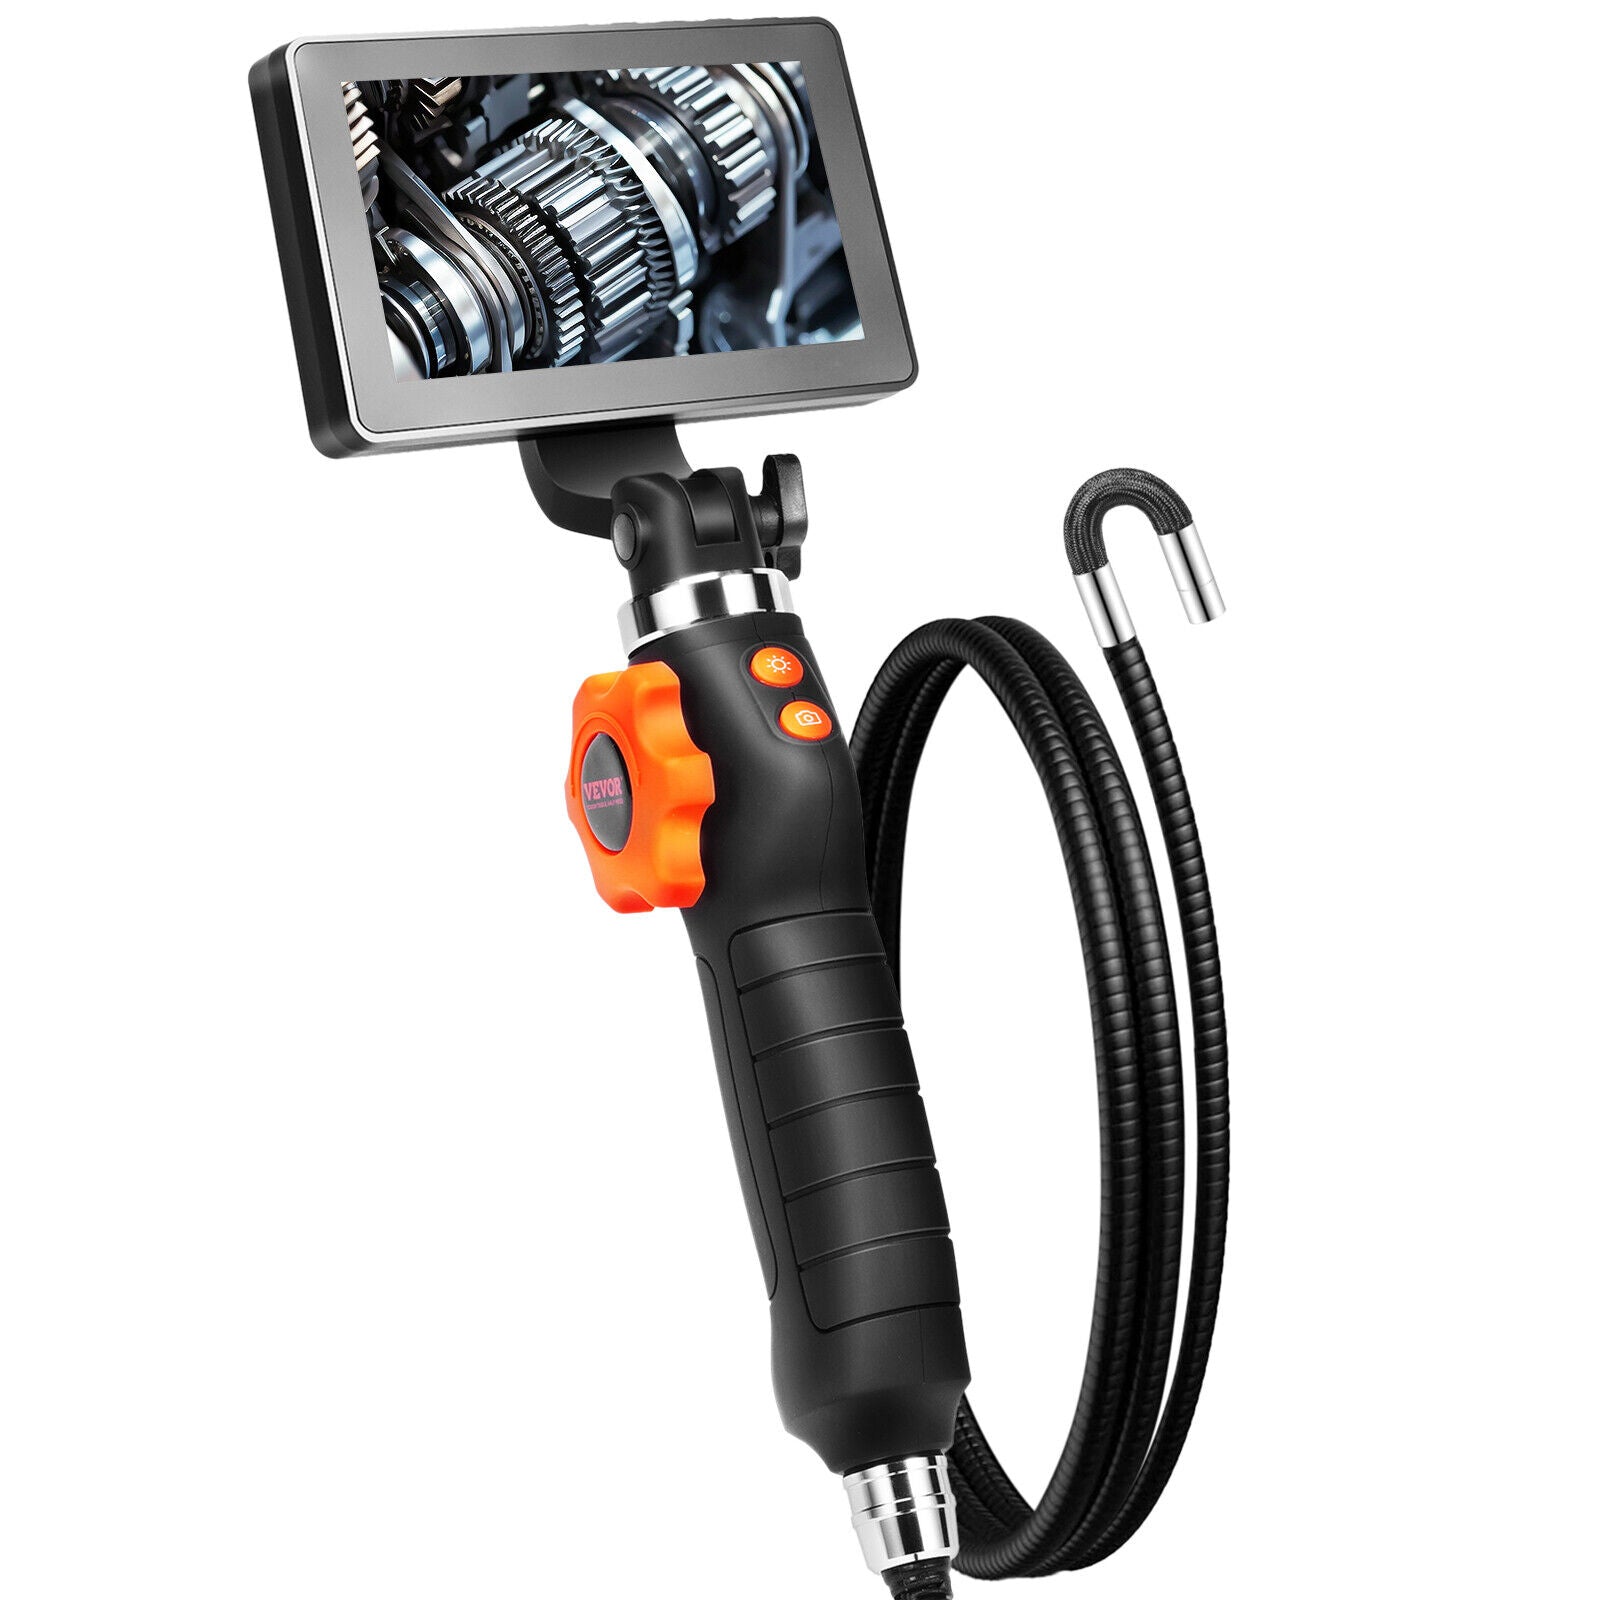 Large LED 5" IPS Screen Endoscope Inspection Camera 6.4mm Borescope Pipe Camera